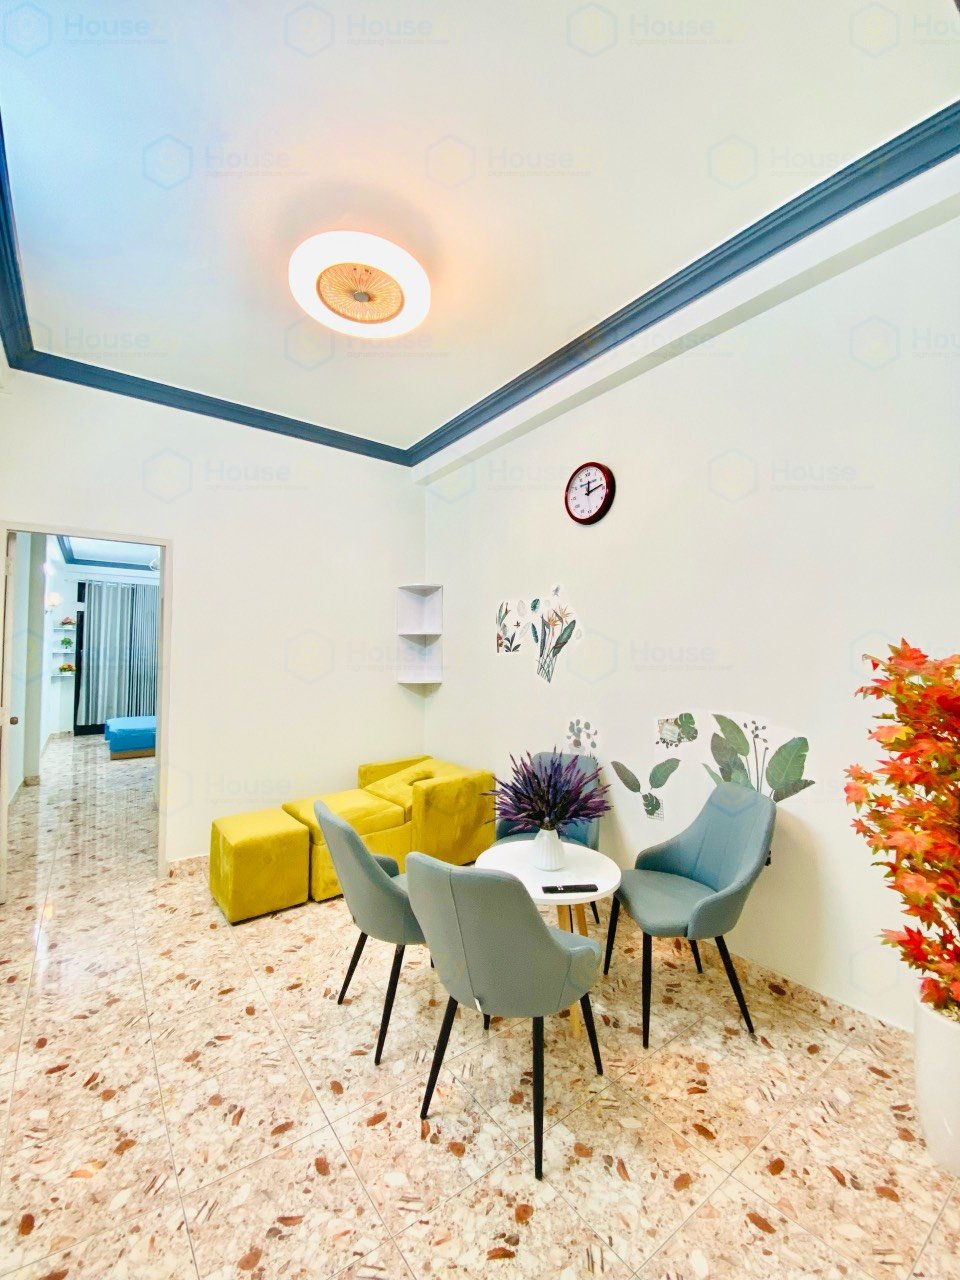 HouseZy - Happy House - House For Rent - Service Apartment Nguyen Thi Minh Khai District 1 Ho Chi Minh City